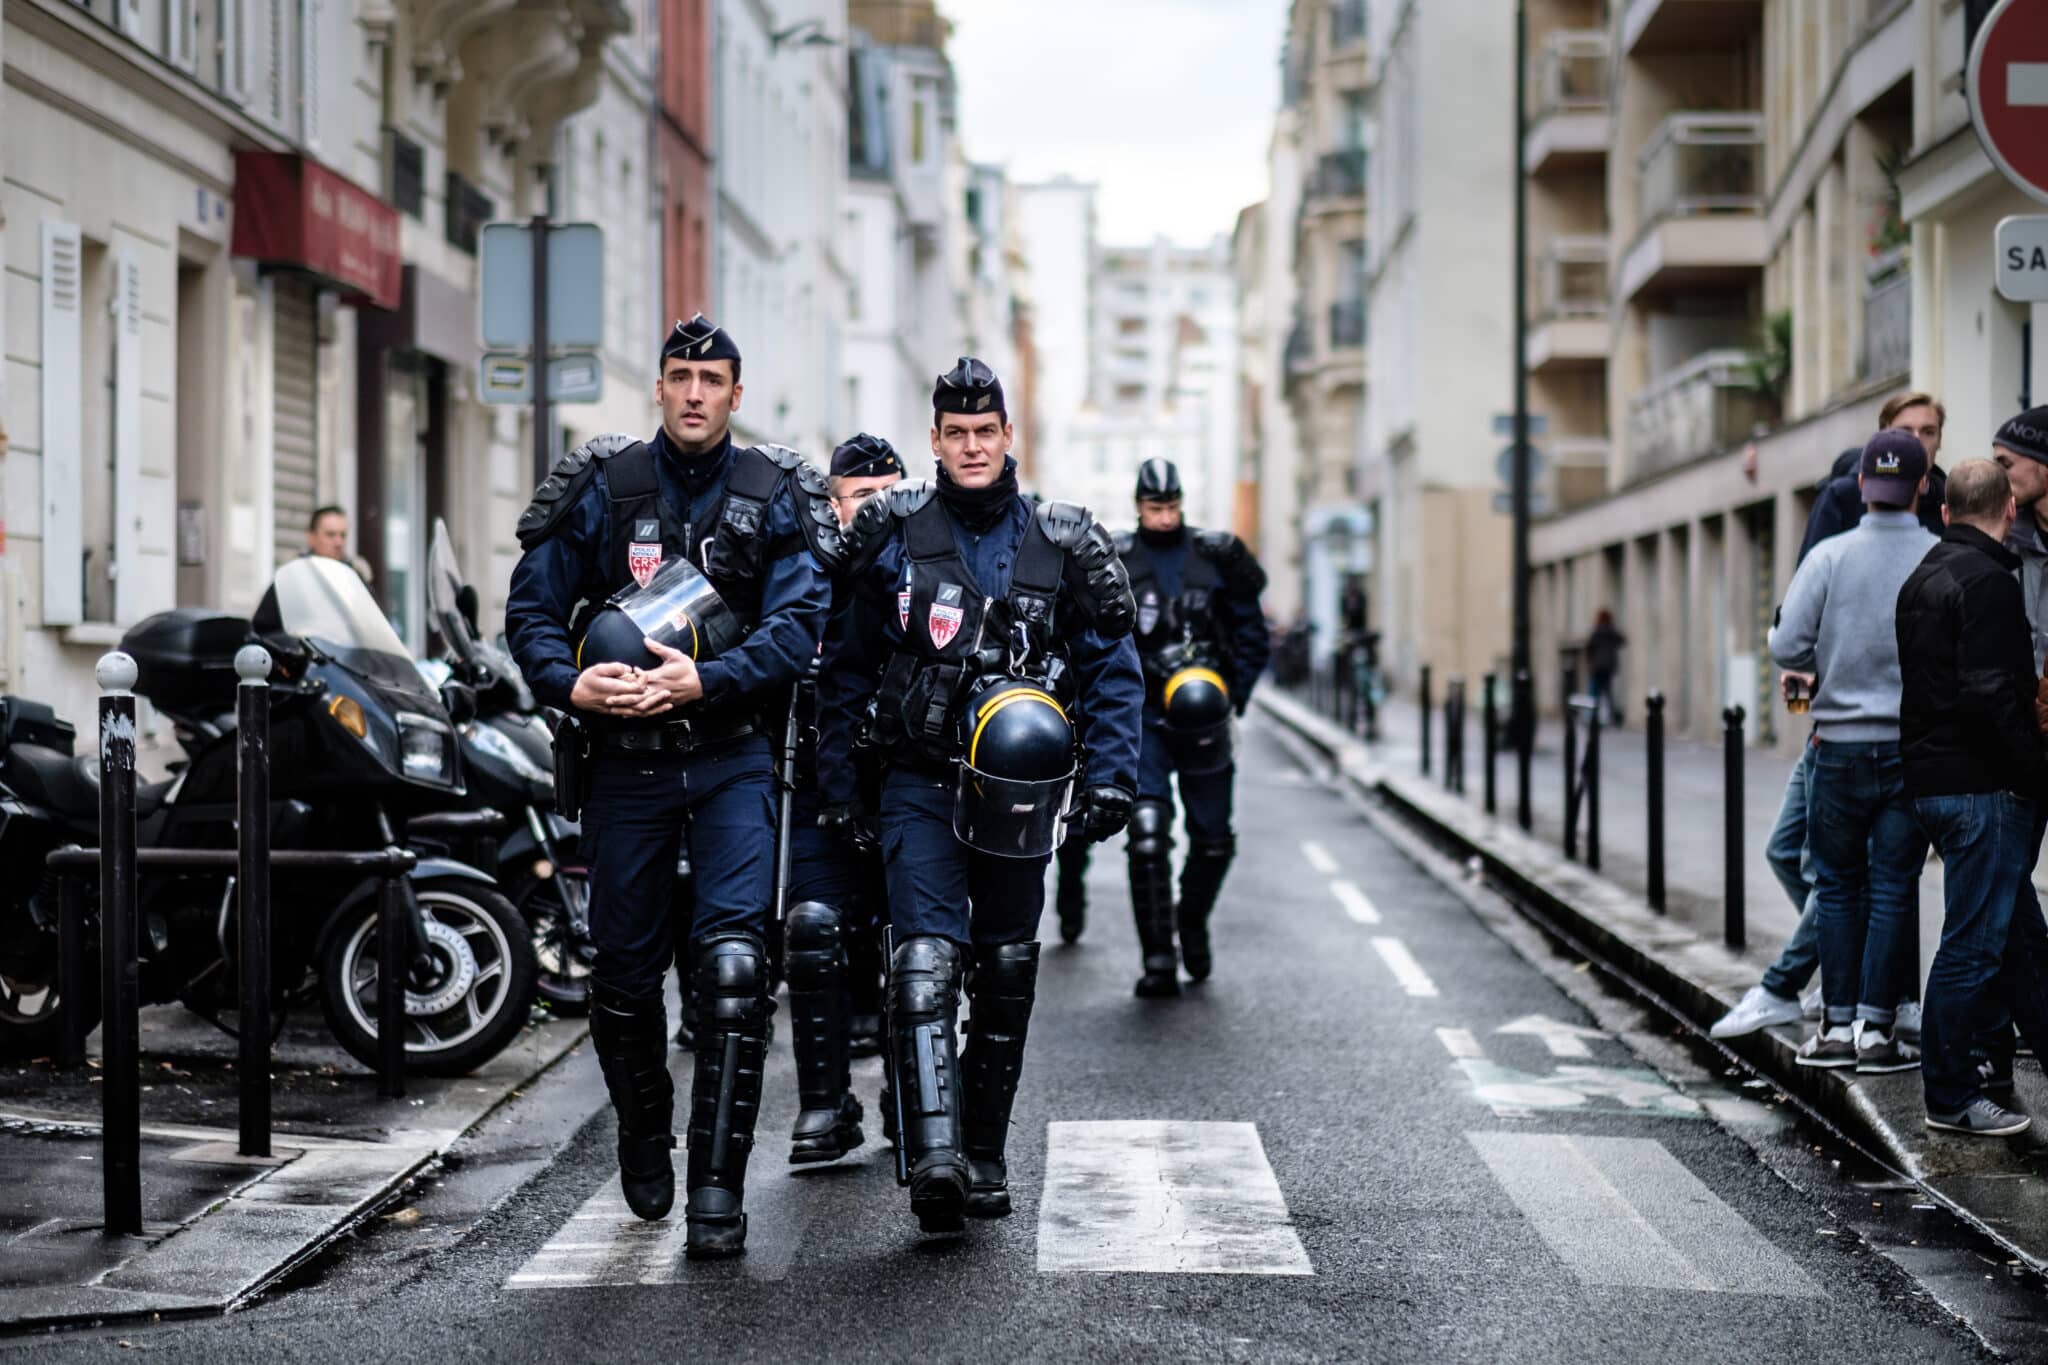 Polizia anti-sommossa francese a Parigi. Immagine ripresa da Kristoffer Trolle/Flickr in licenza CC